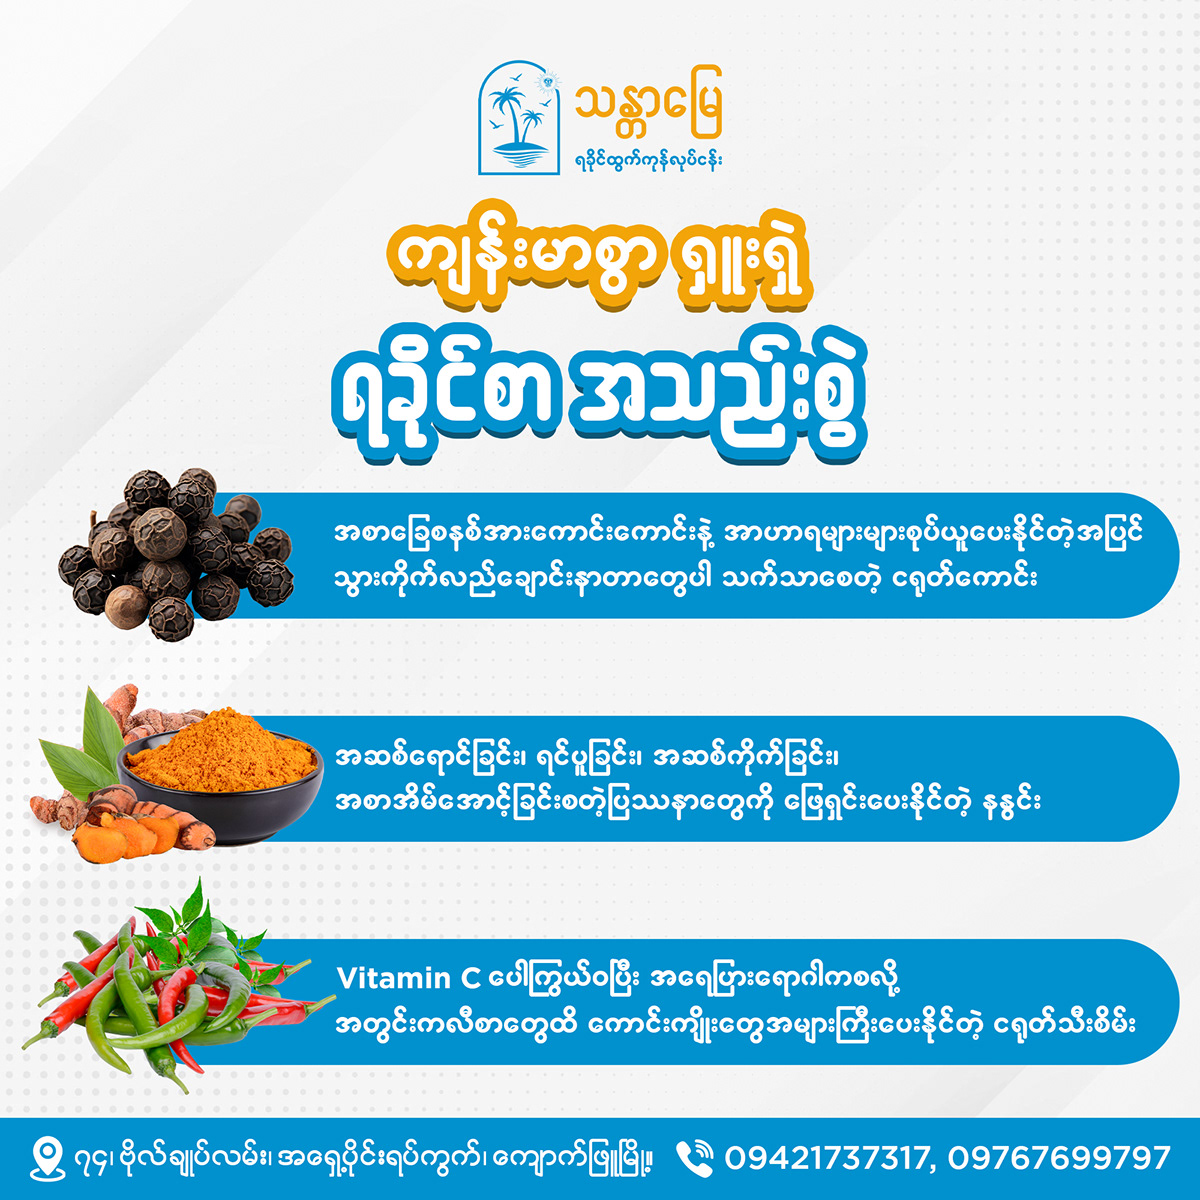 Social media post marketing   Advertising  Socialmedia design myanmar burma seafood